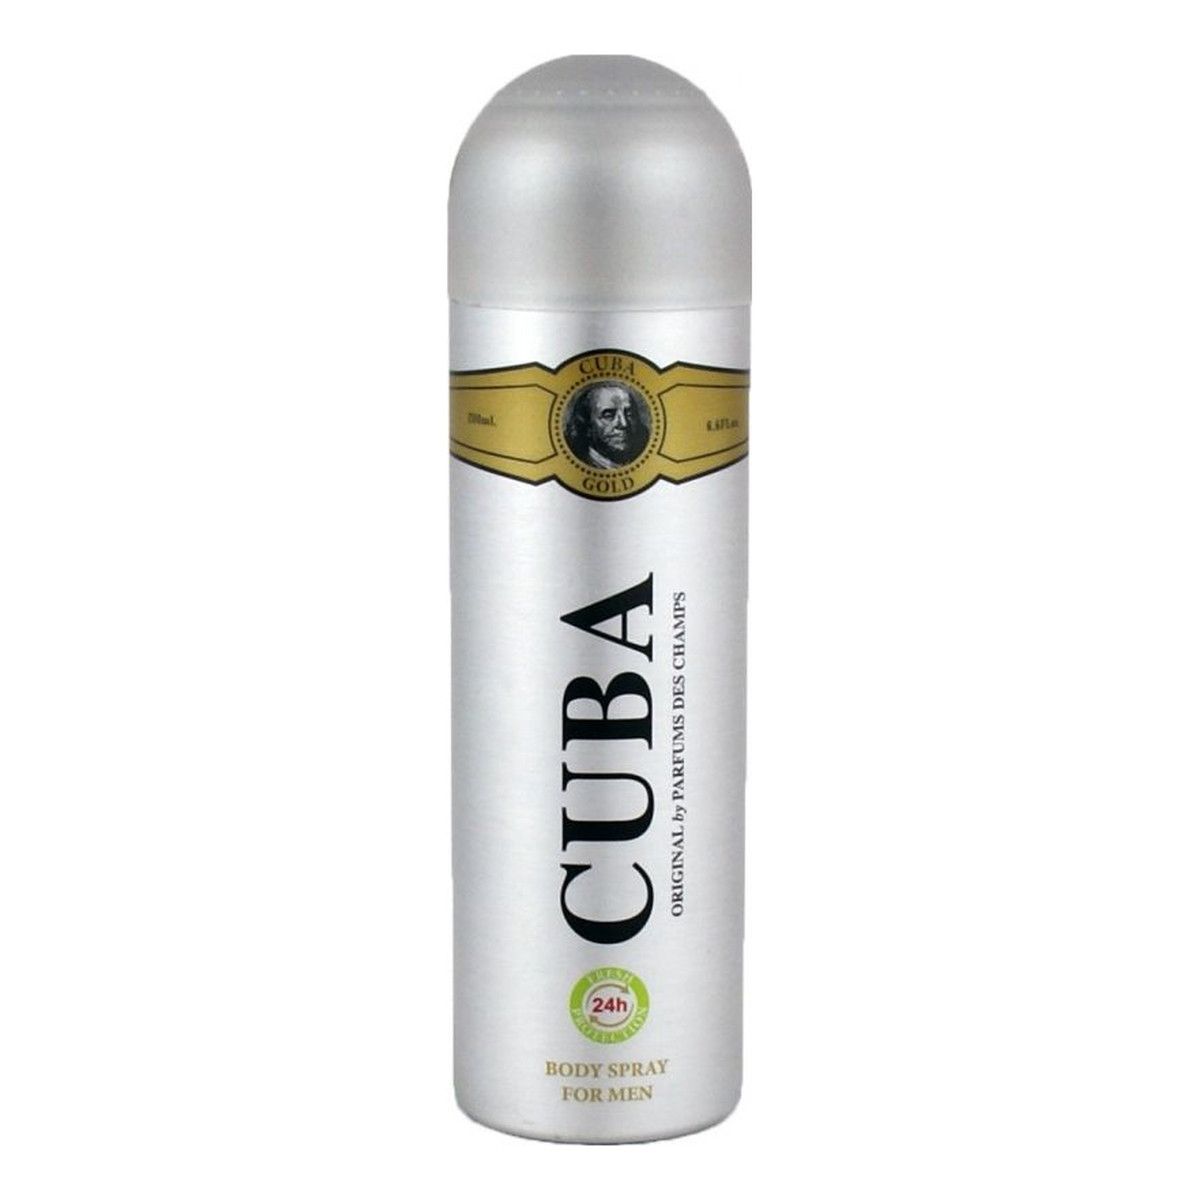 Cuba Gold dezodorant 200ml